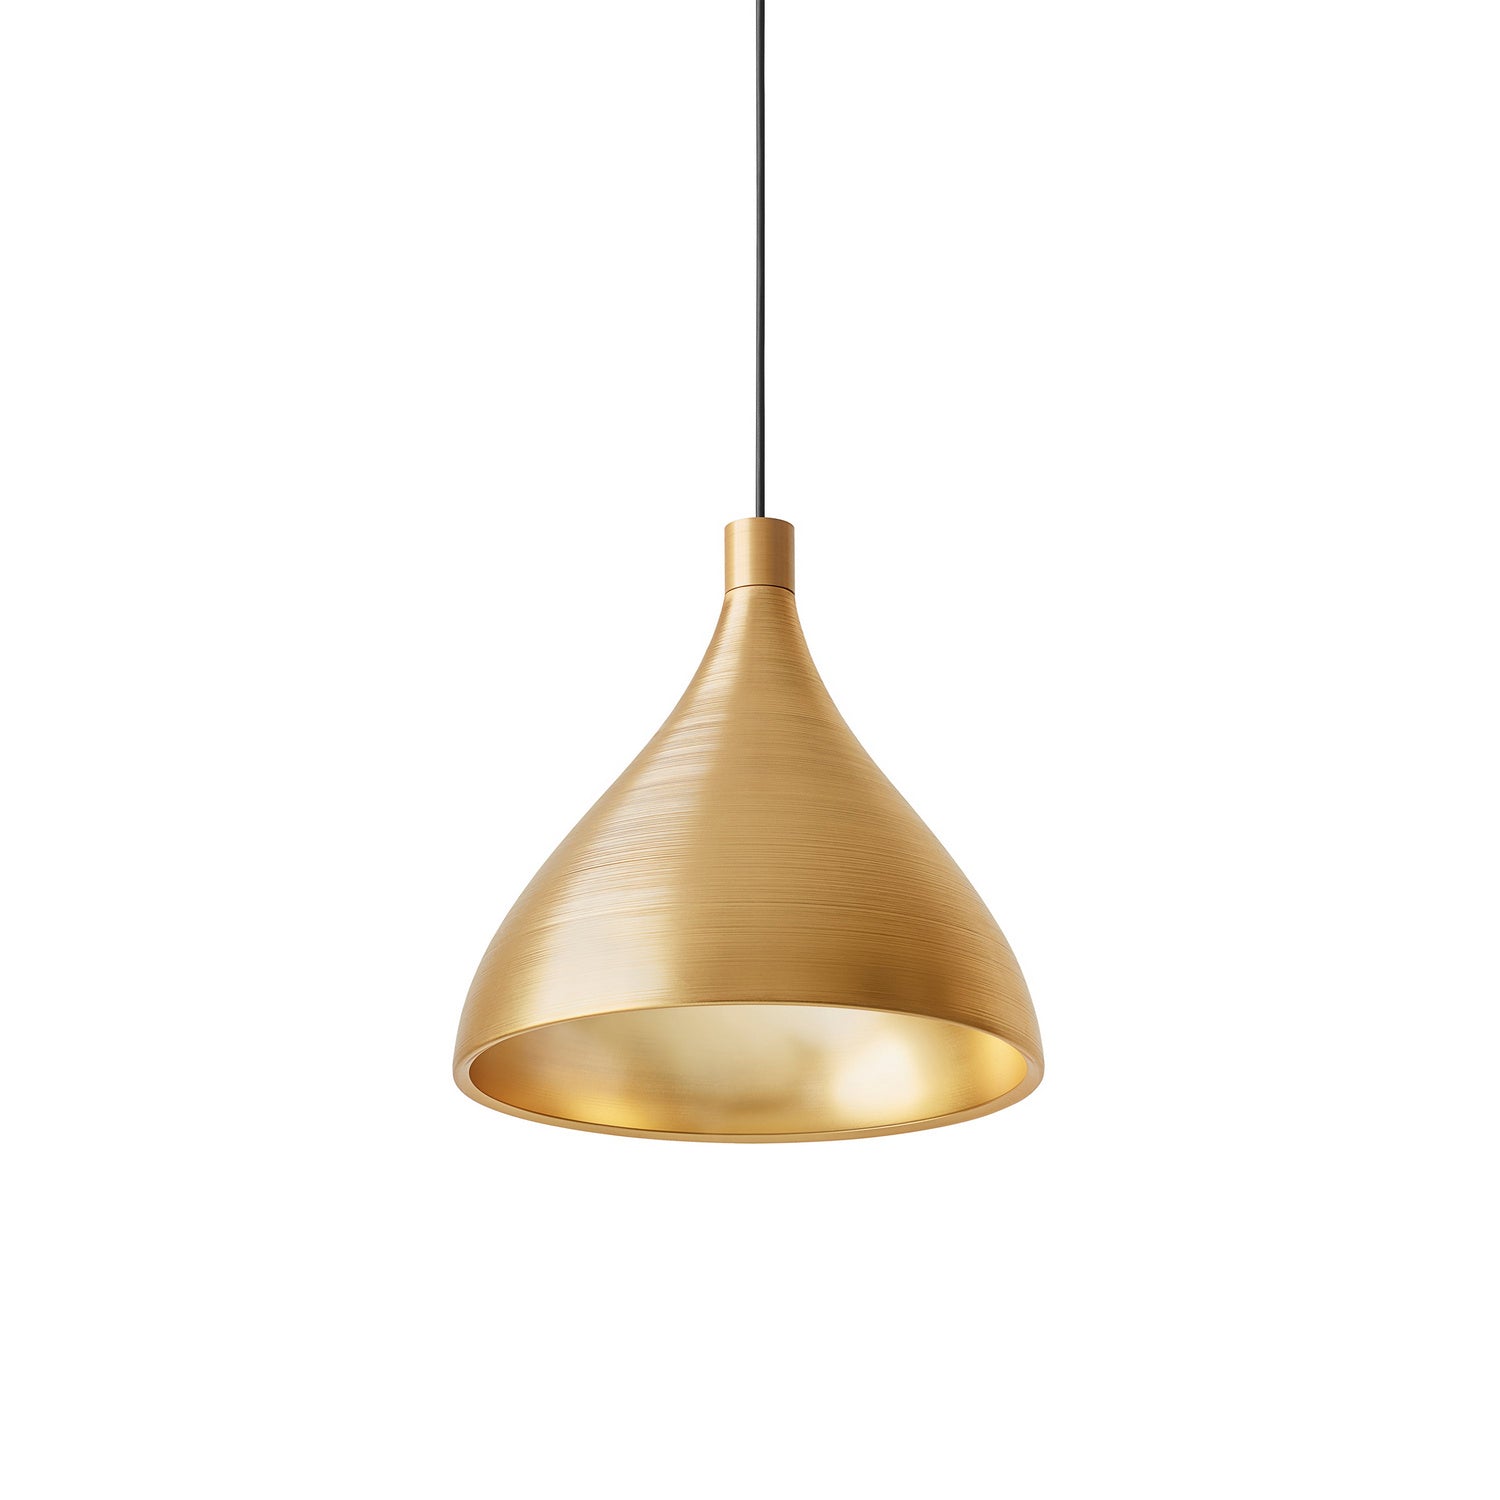 Pablo Designs - LED Pendant - Brass/ Brass- Union Lighting Luminaires Decor